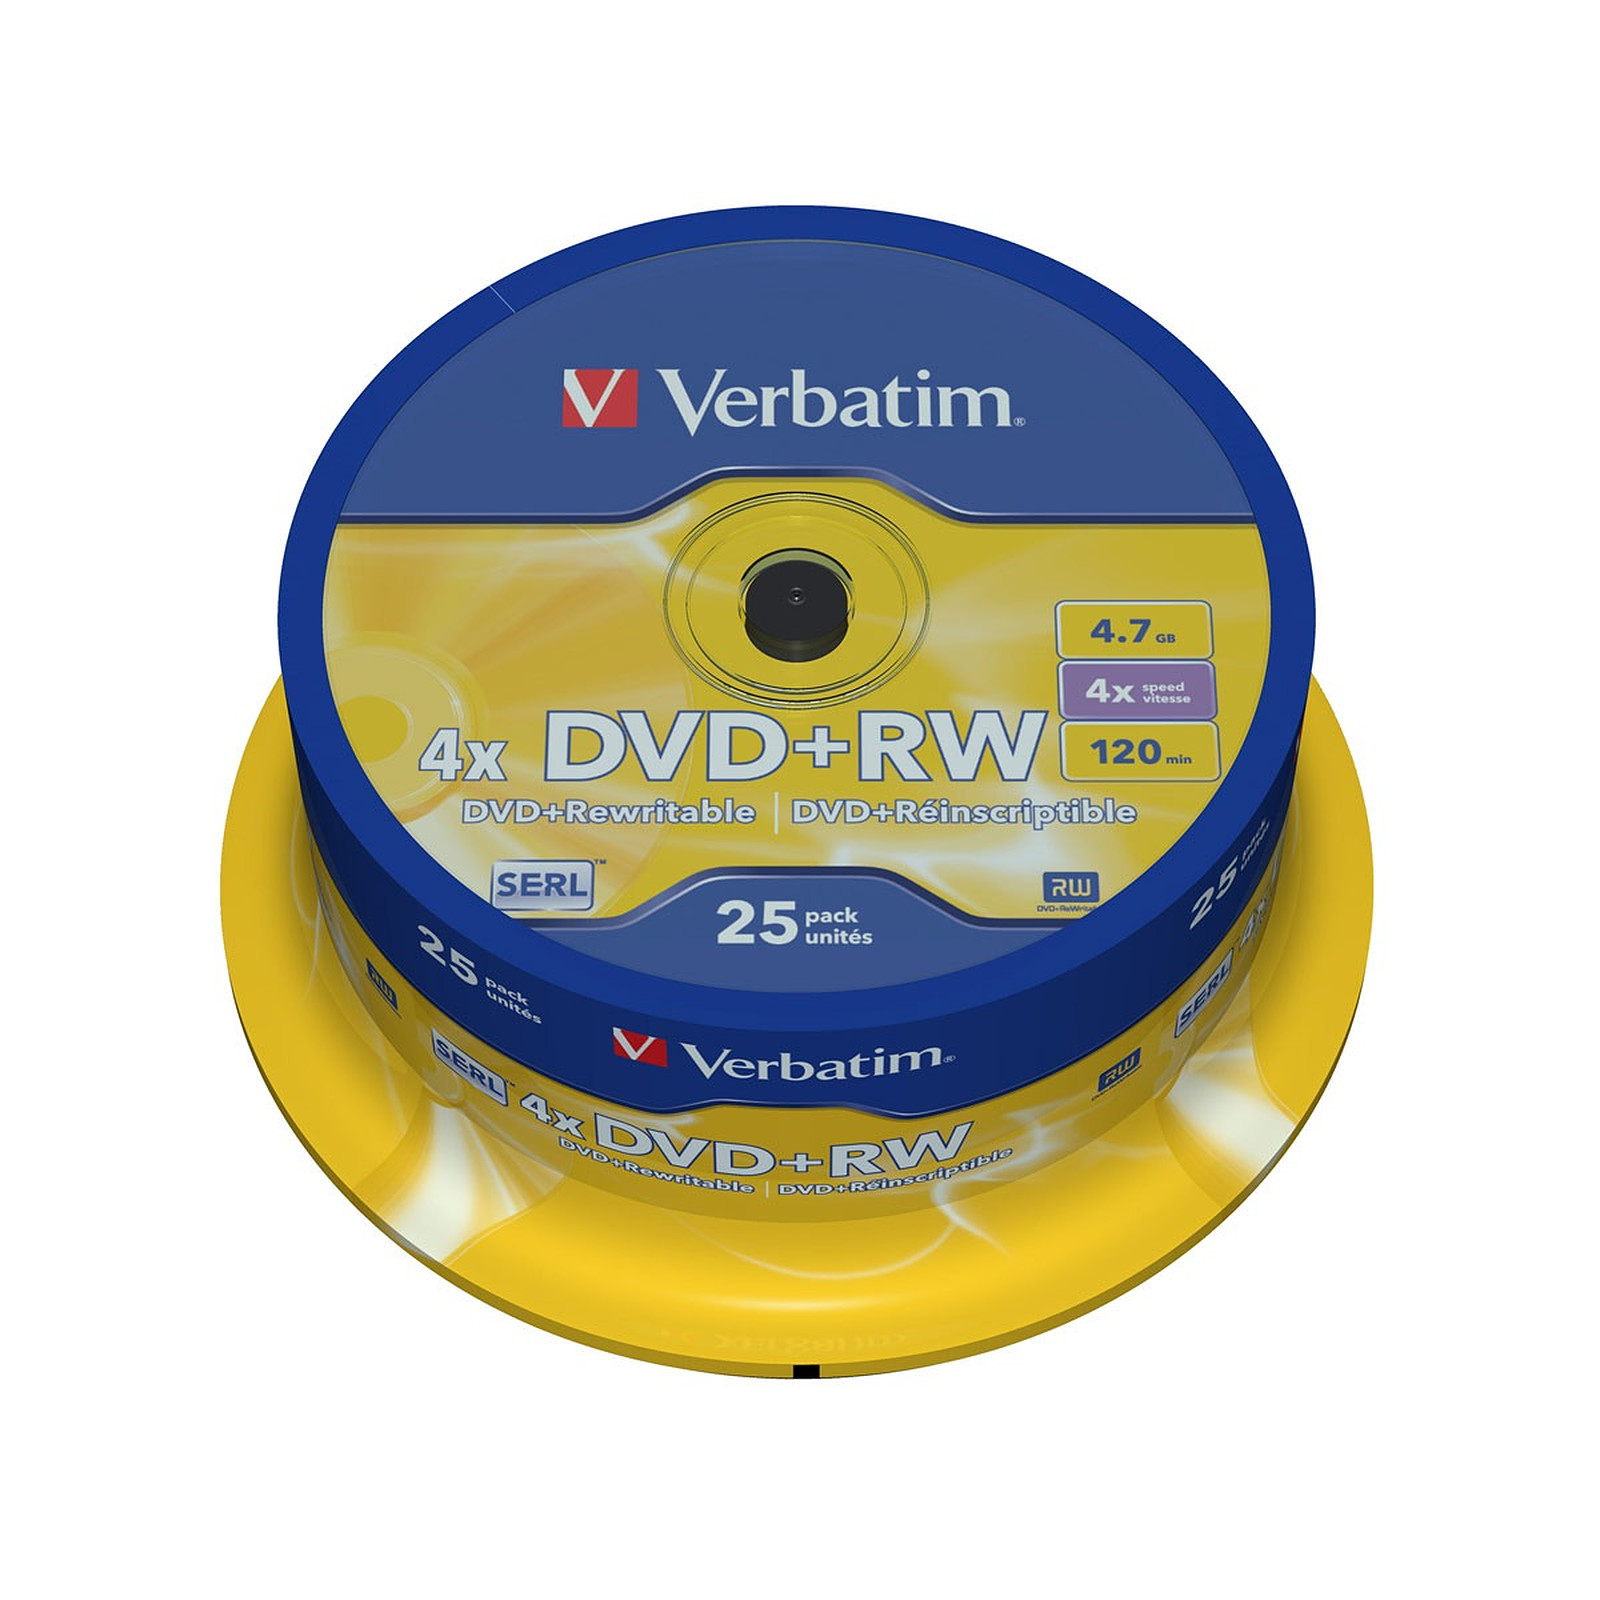 Verbatim DVD+RW 4.7 Go certifie 4x (pack de 25, spindle) - DVD vierge Verbatim